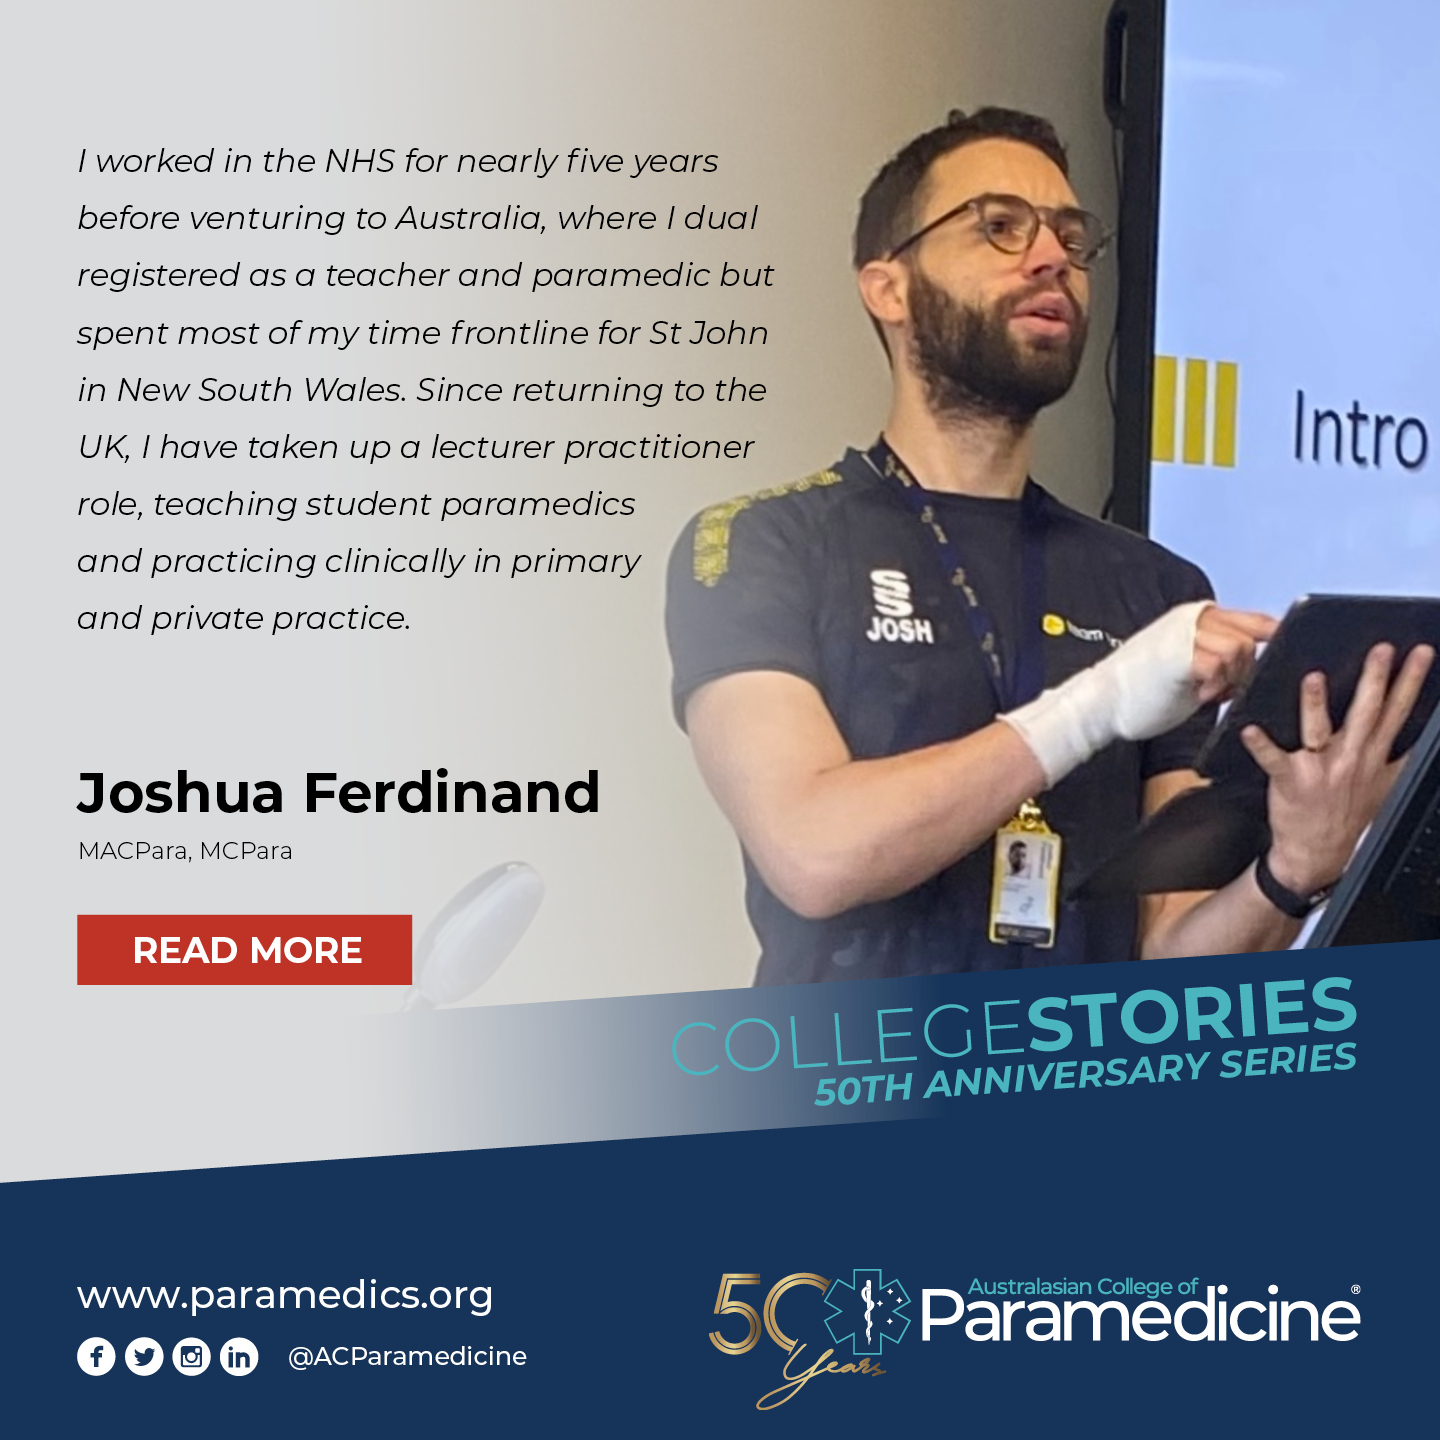 https://paramedics.org/storage/news/Joshua-Ferdinand.jpg